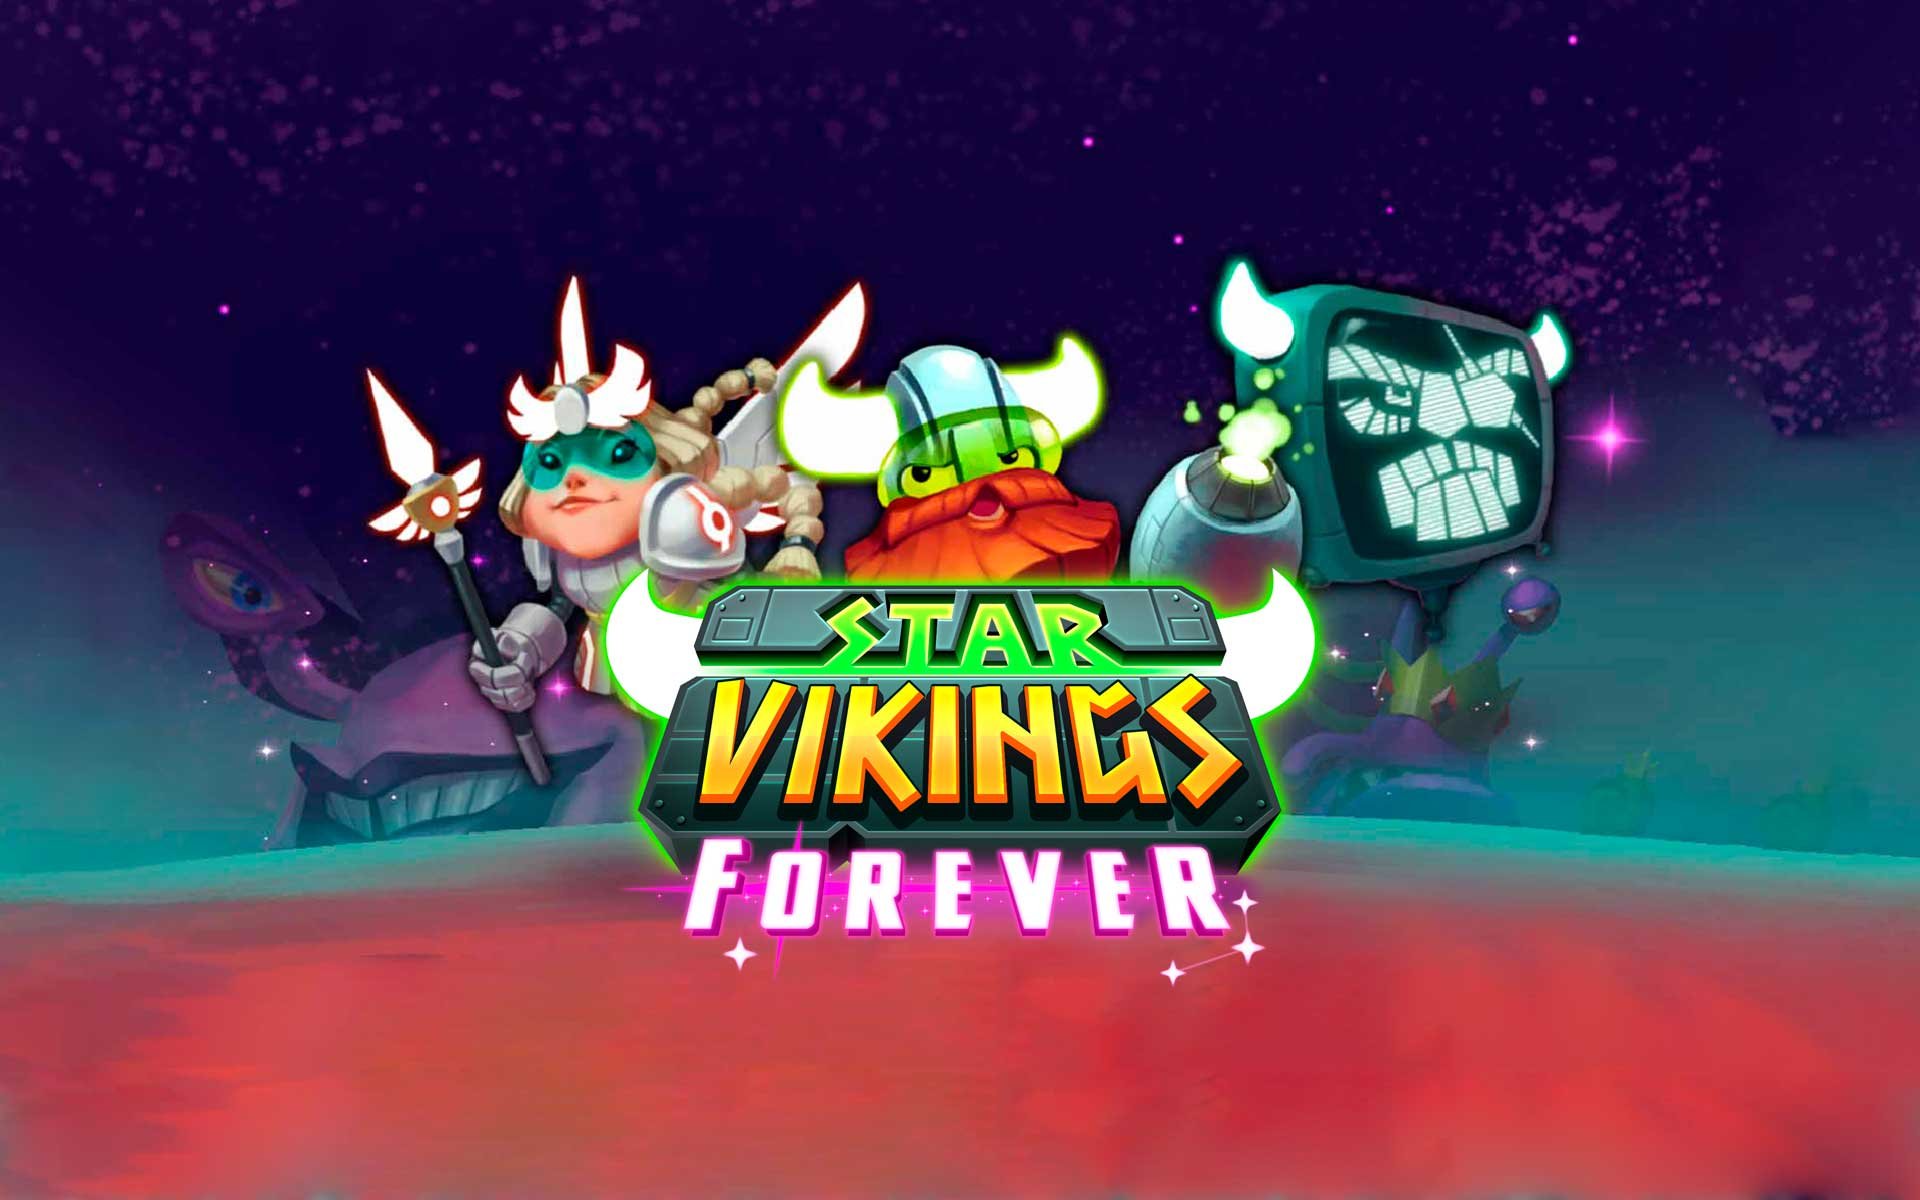 Compre Star Vikings Forever a partir de R$ 19.99